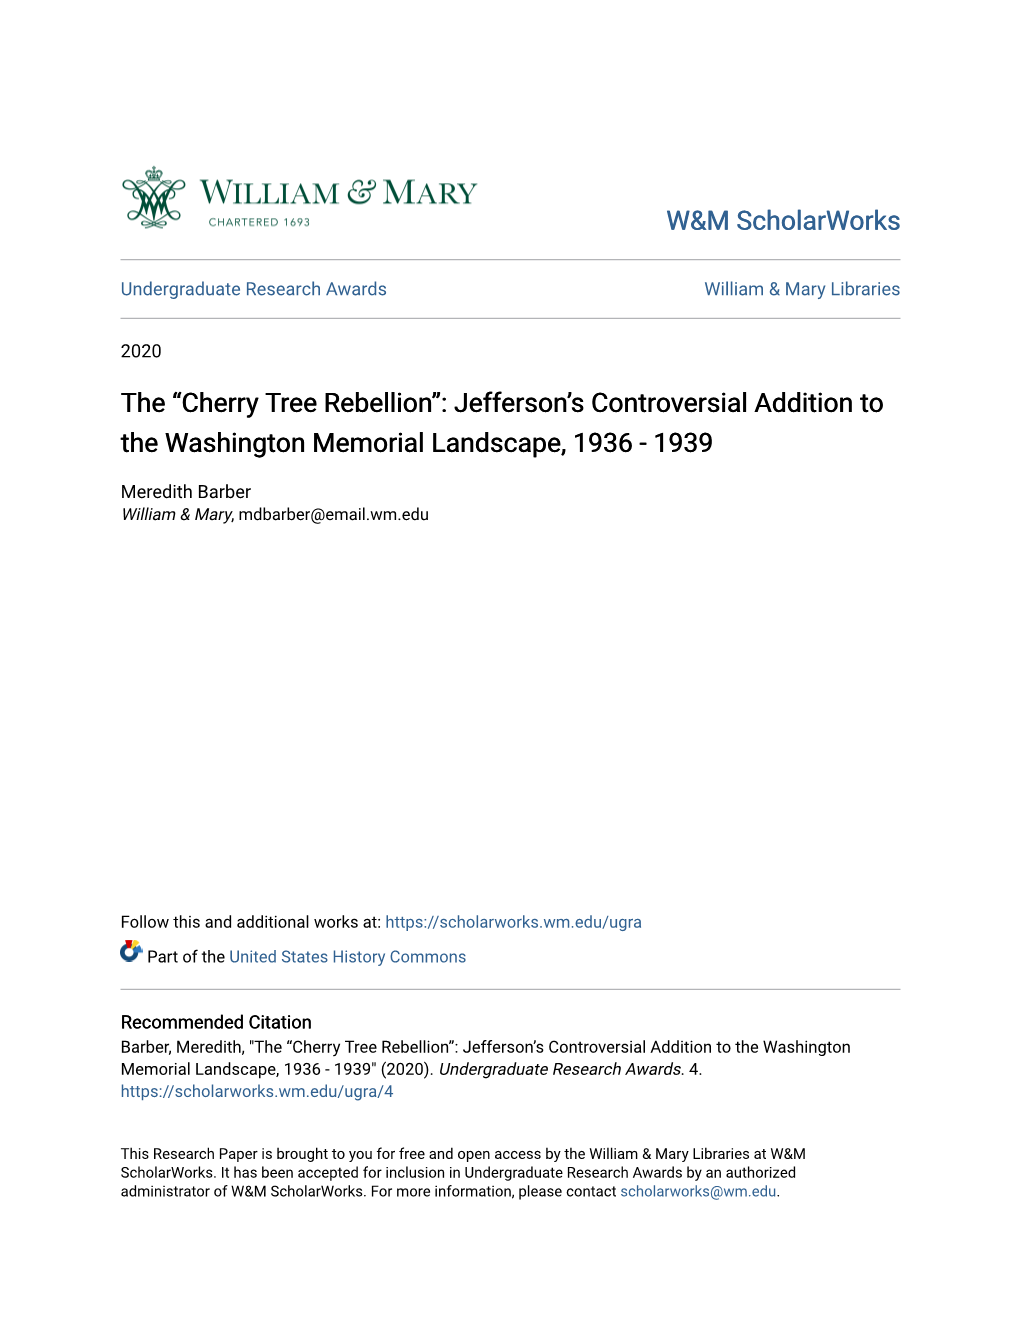 Cherry Tree Rebellion”: Jefferson’S Controversial Addition to the Washington Memorial Landscape, 1936 - 1939